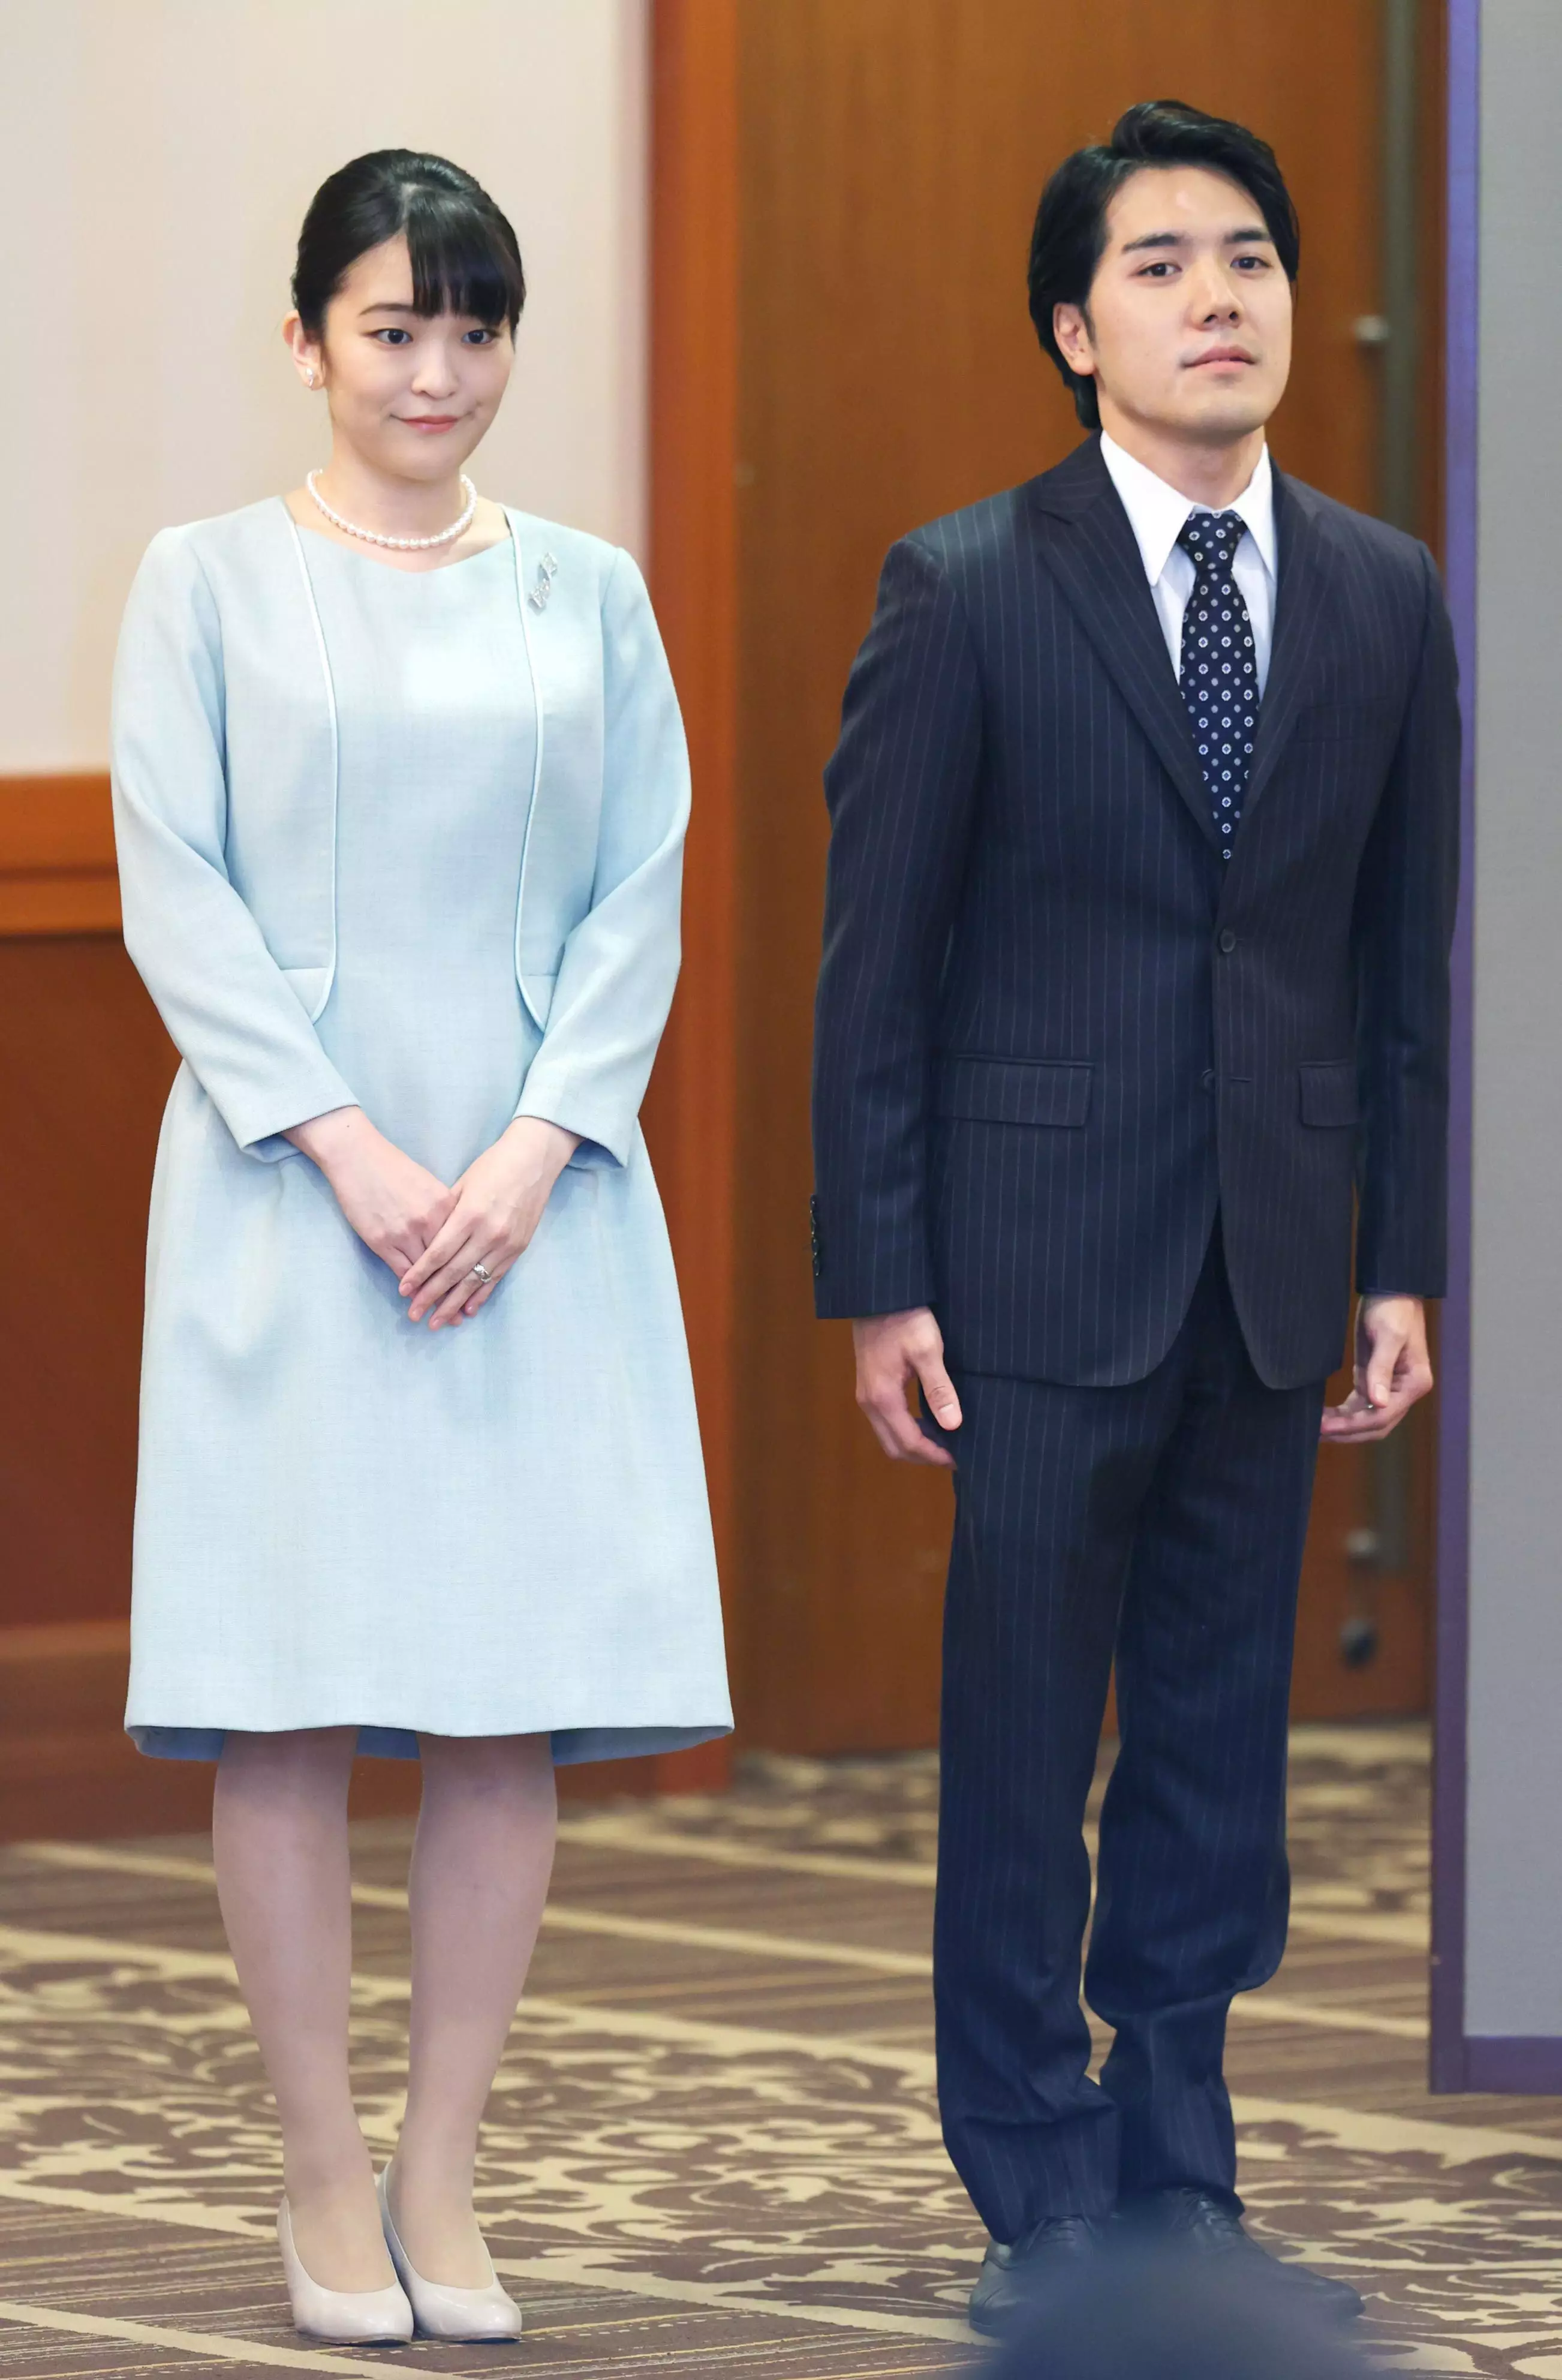 Princess Mako's new husband, Kei Komuro, is considered a 'commoner' among the Japanese Royal Family.